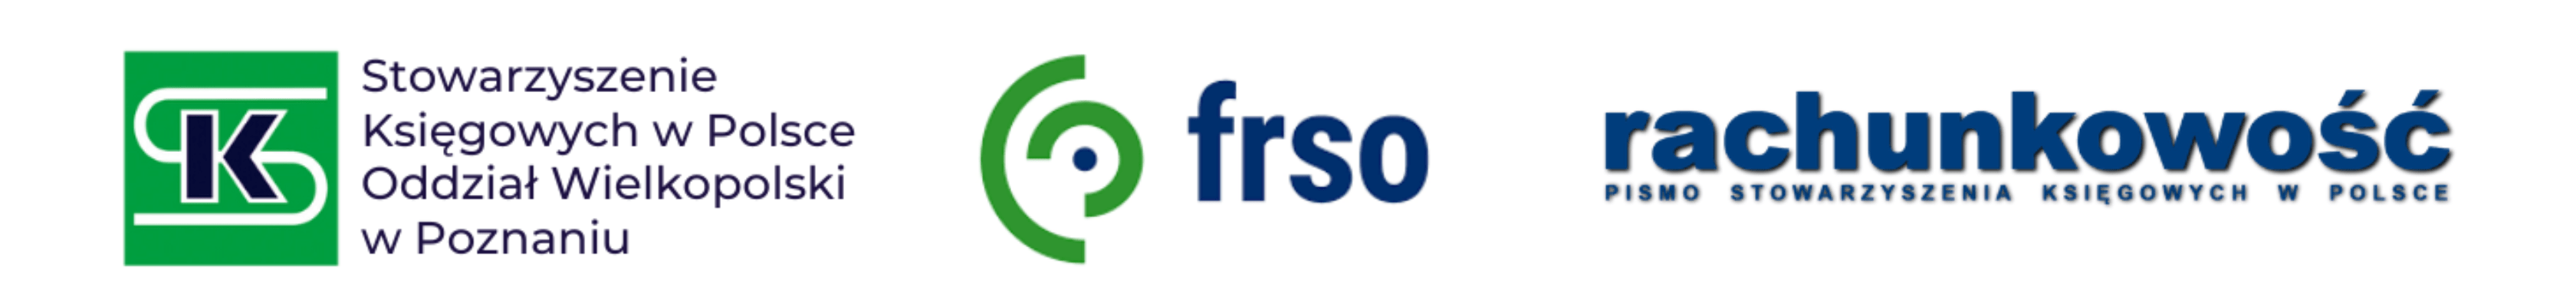 FinanSowa - logo collection